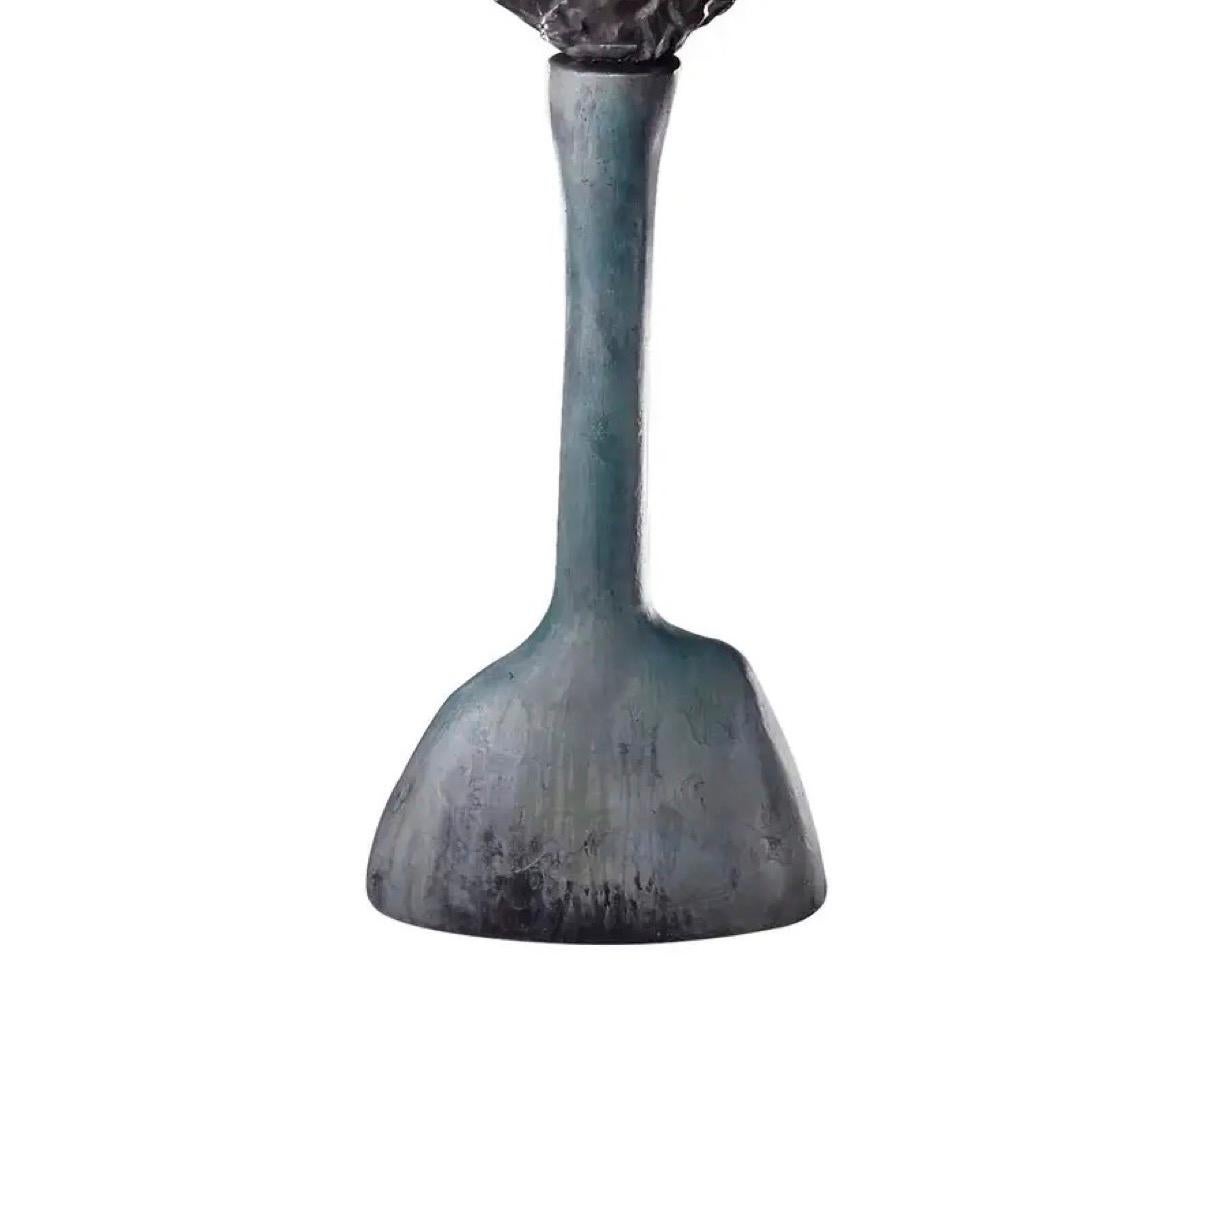 Glazed Richard Hirsch Pedestal Bowl with Weapon #16 Ceramic Sculpture, 1997 For Sale